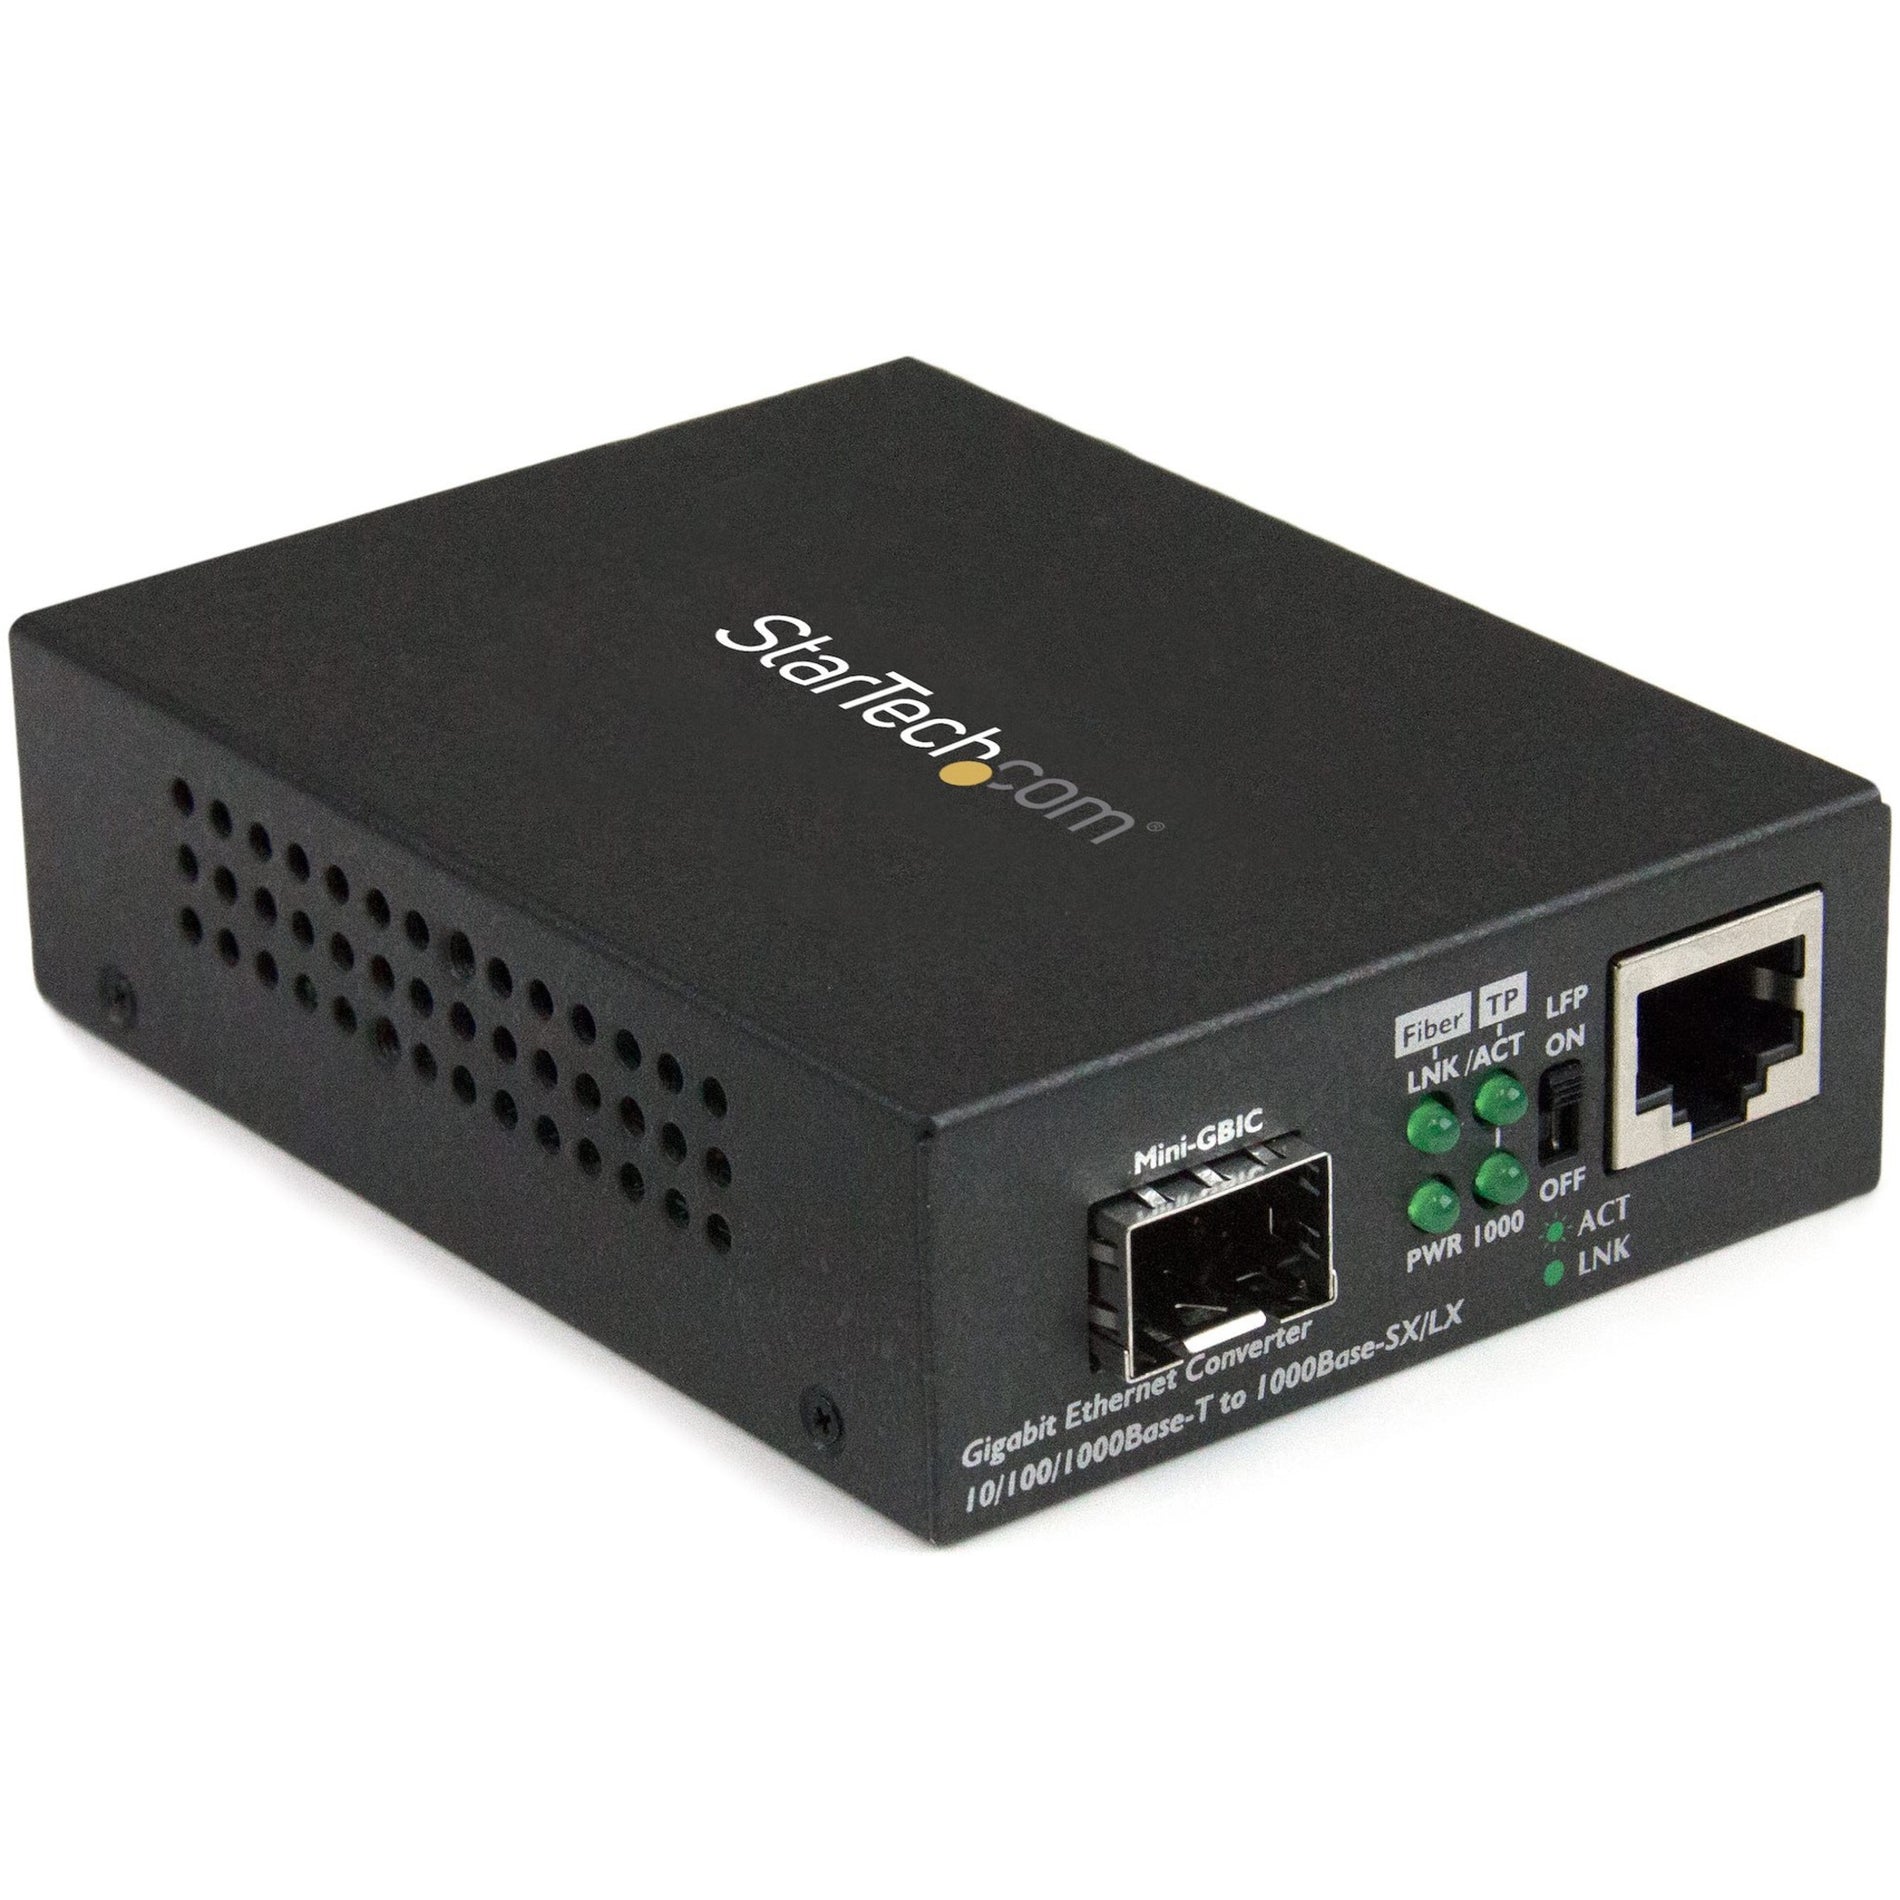 StarTech.com MCM1110SFP Gigabit Ethernet Fiber Media Converter with Open SFP Slot, Supports 10/100/1000 Networks